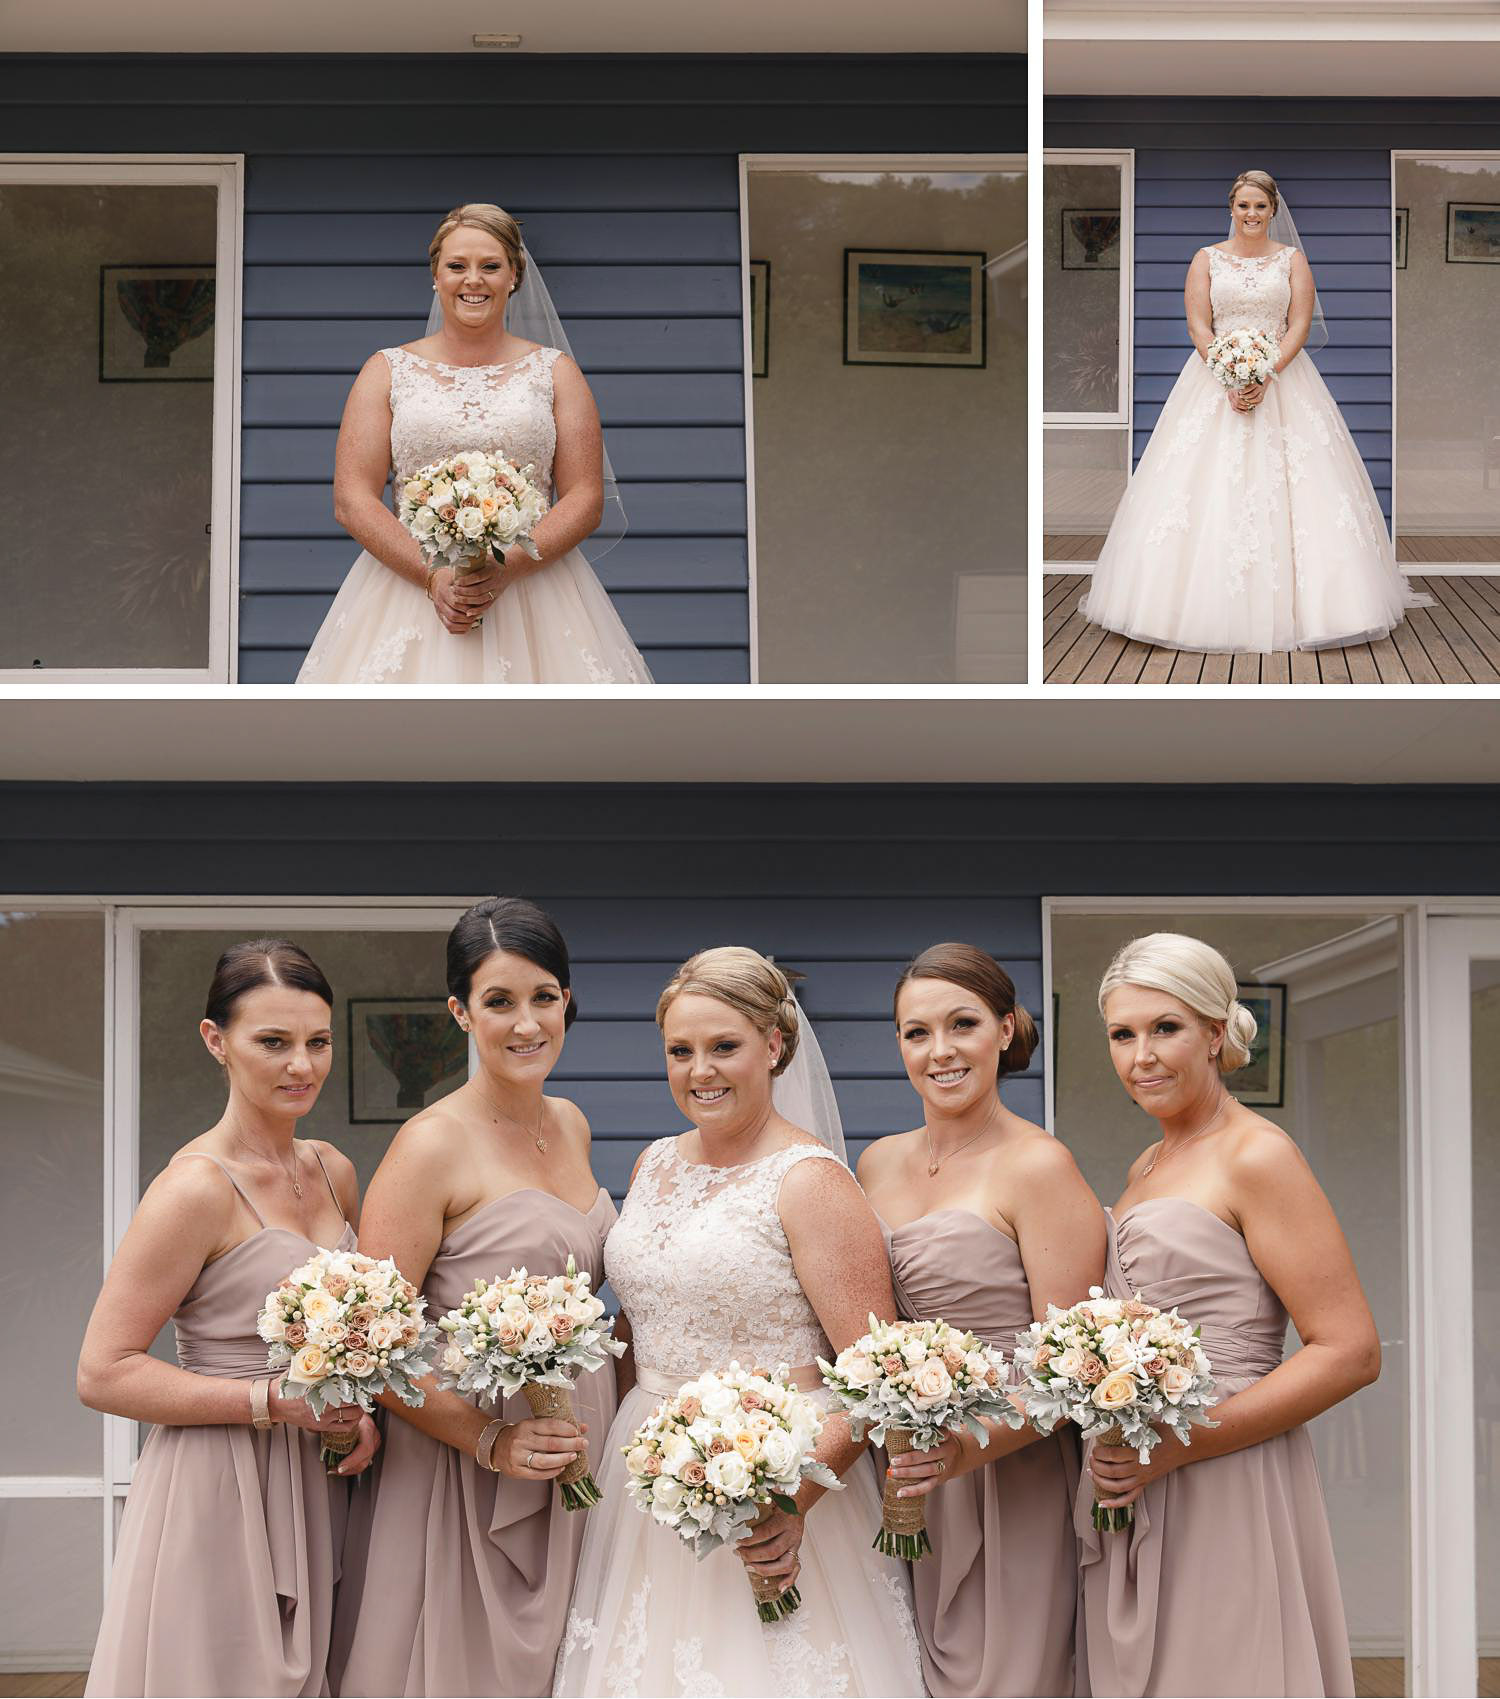 Pig and Whistle, Dromana, Mornington Peninsula Wedding Photos, Beautiful Wedding Dress Blue Grooms Suits Photos by Danae Studios